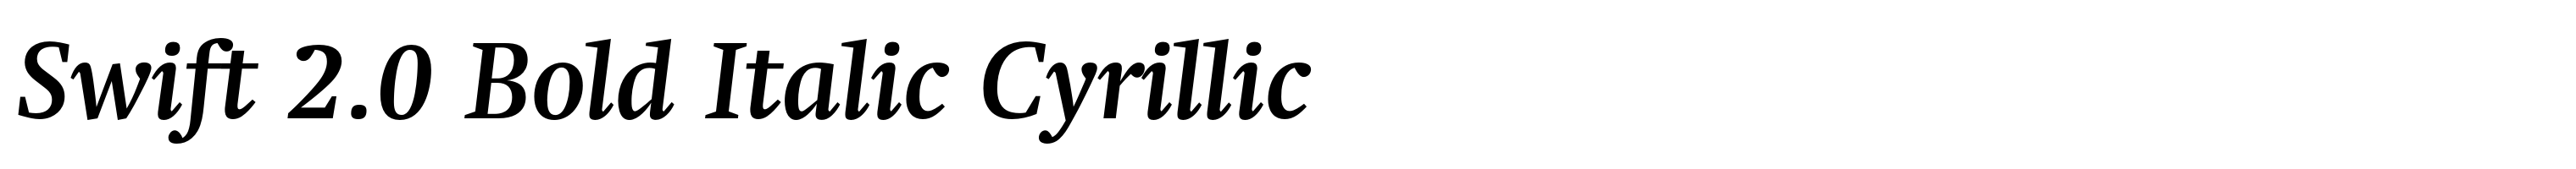 Swift 2.0 Bold Italic Cyrillic